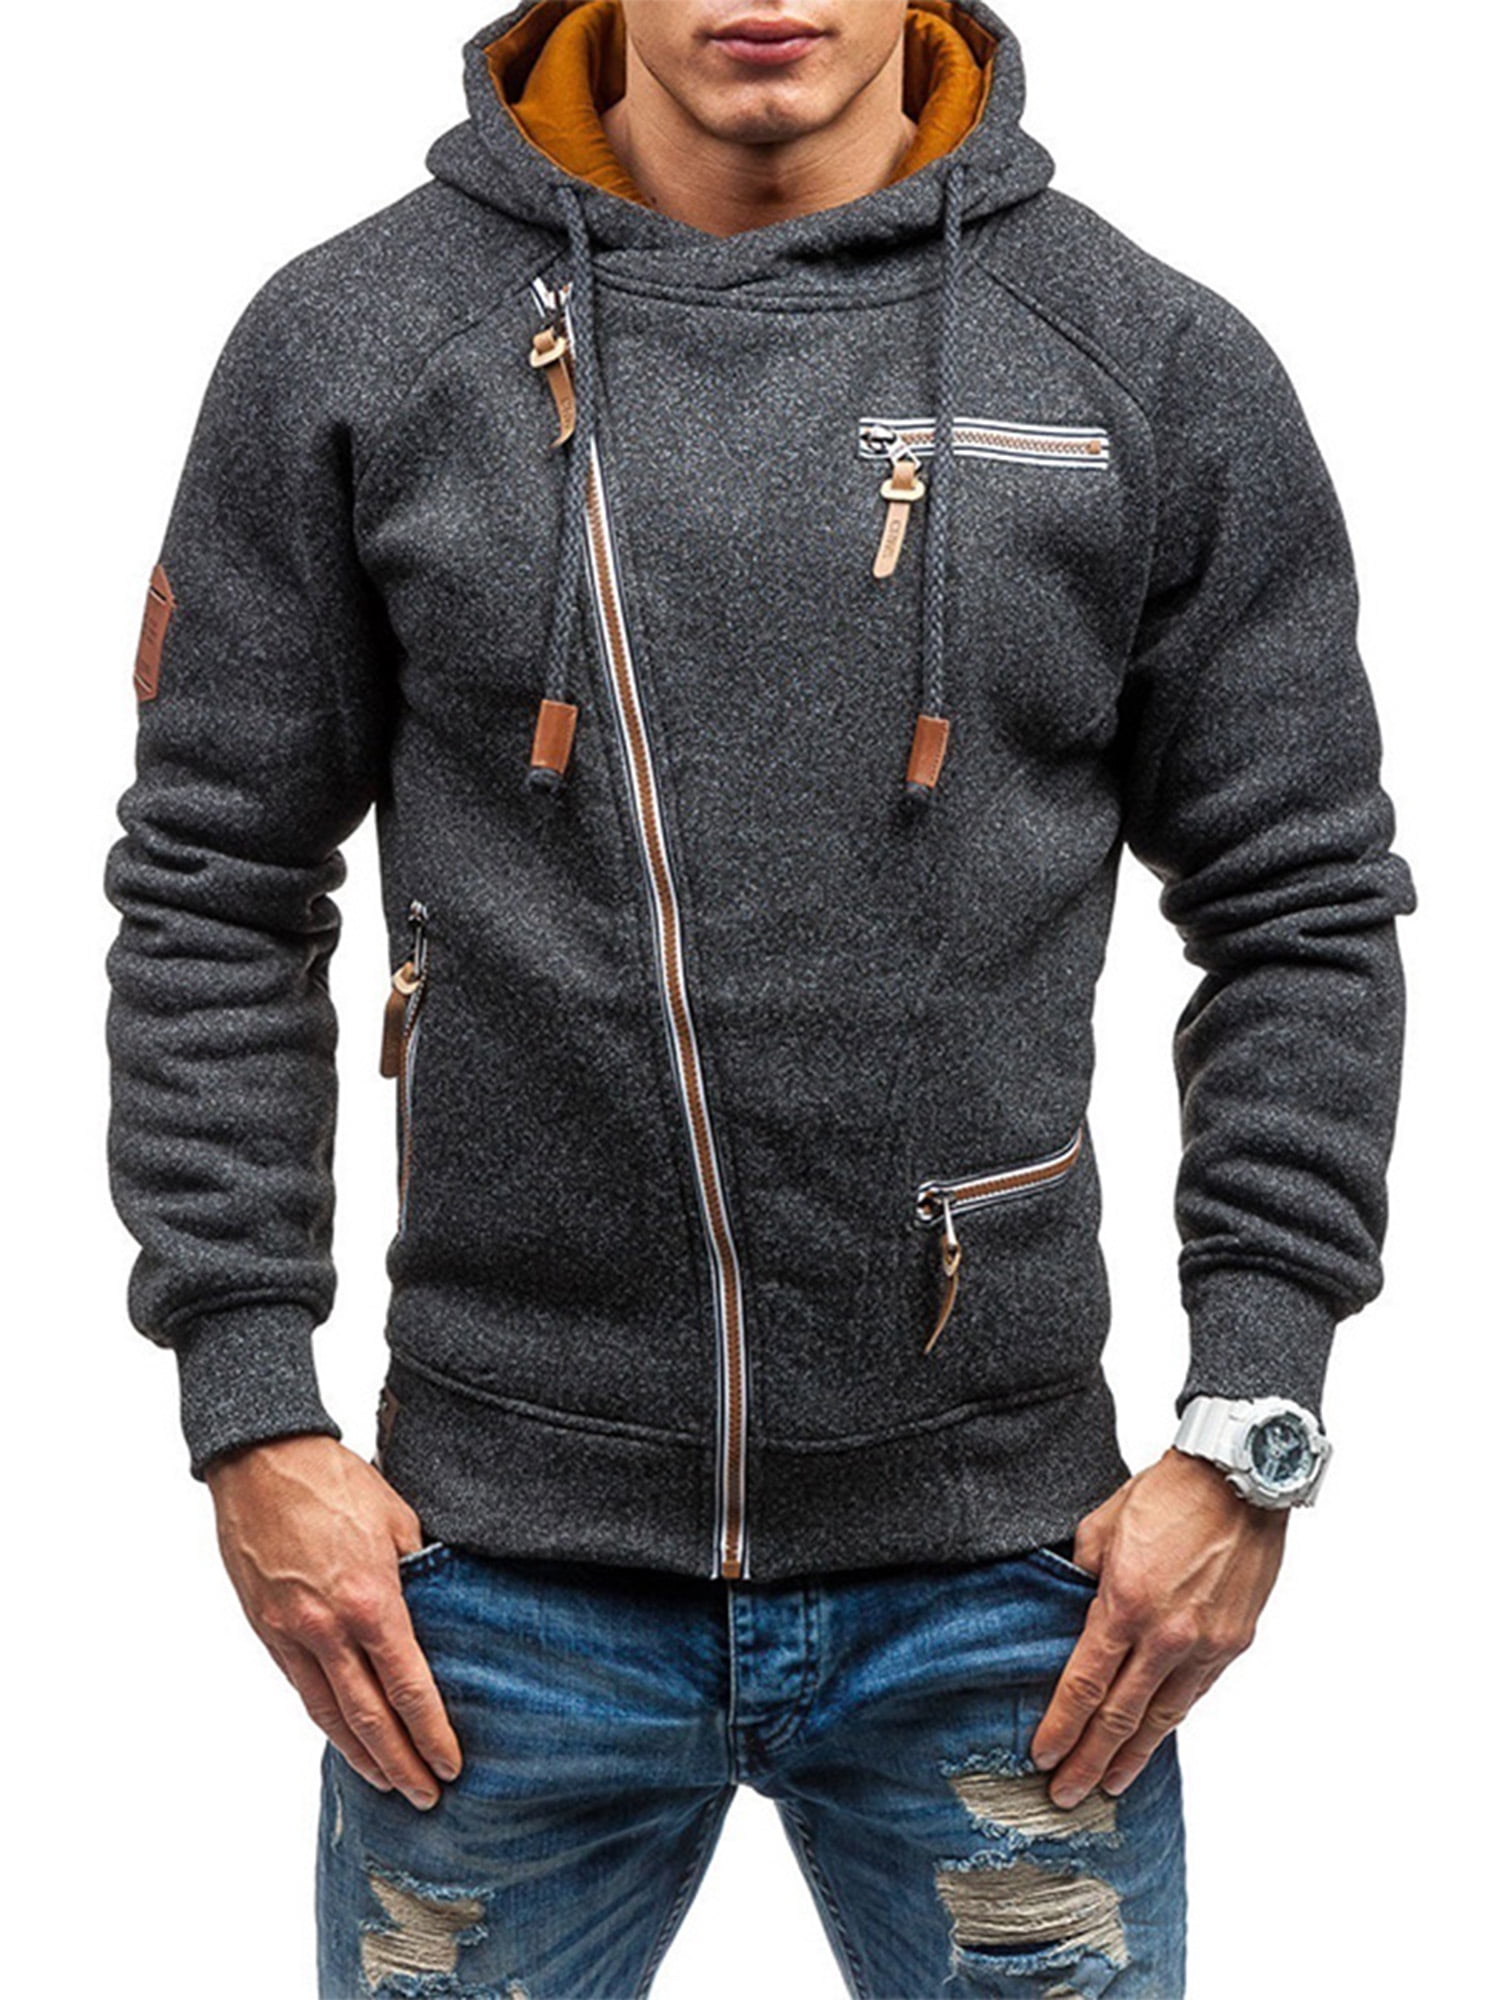 Mens Hooded Sweatshirt Sweater Jumper Pullover Outwear Jacket Coat Tops 